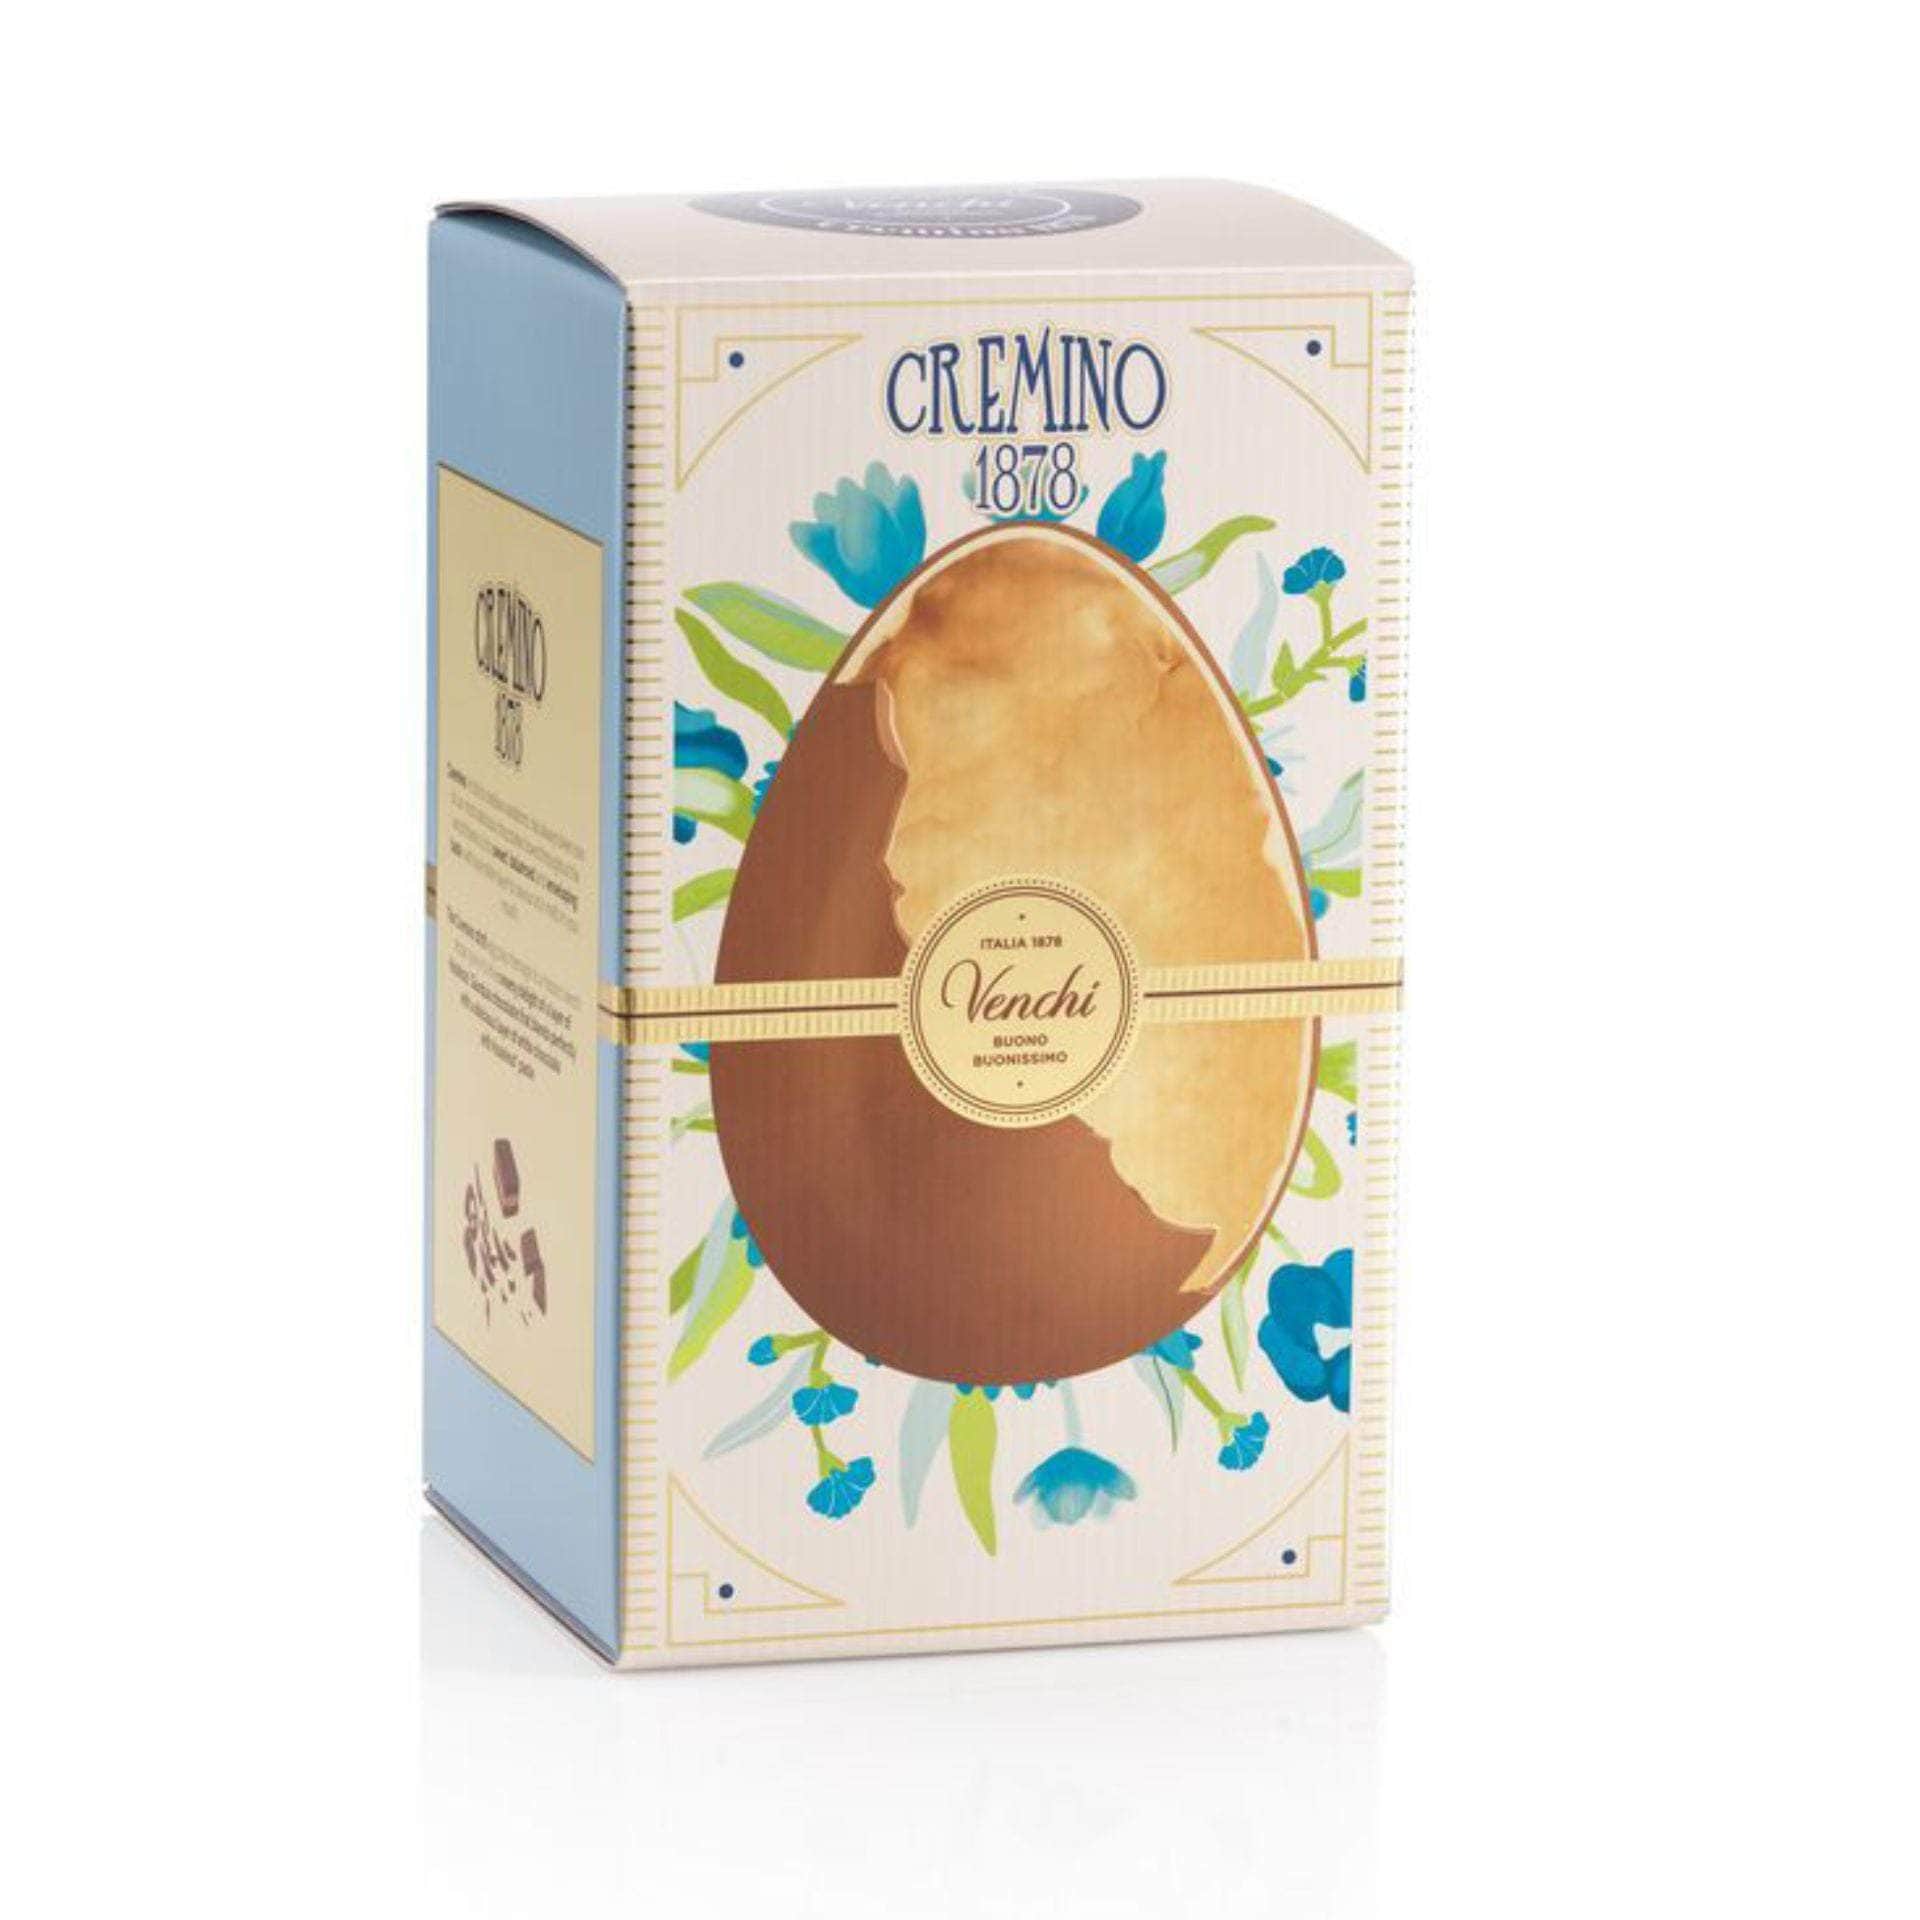 “Cremino” Hazelnut Chocolate Egg